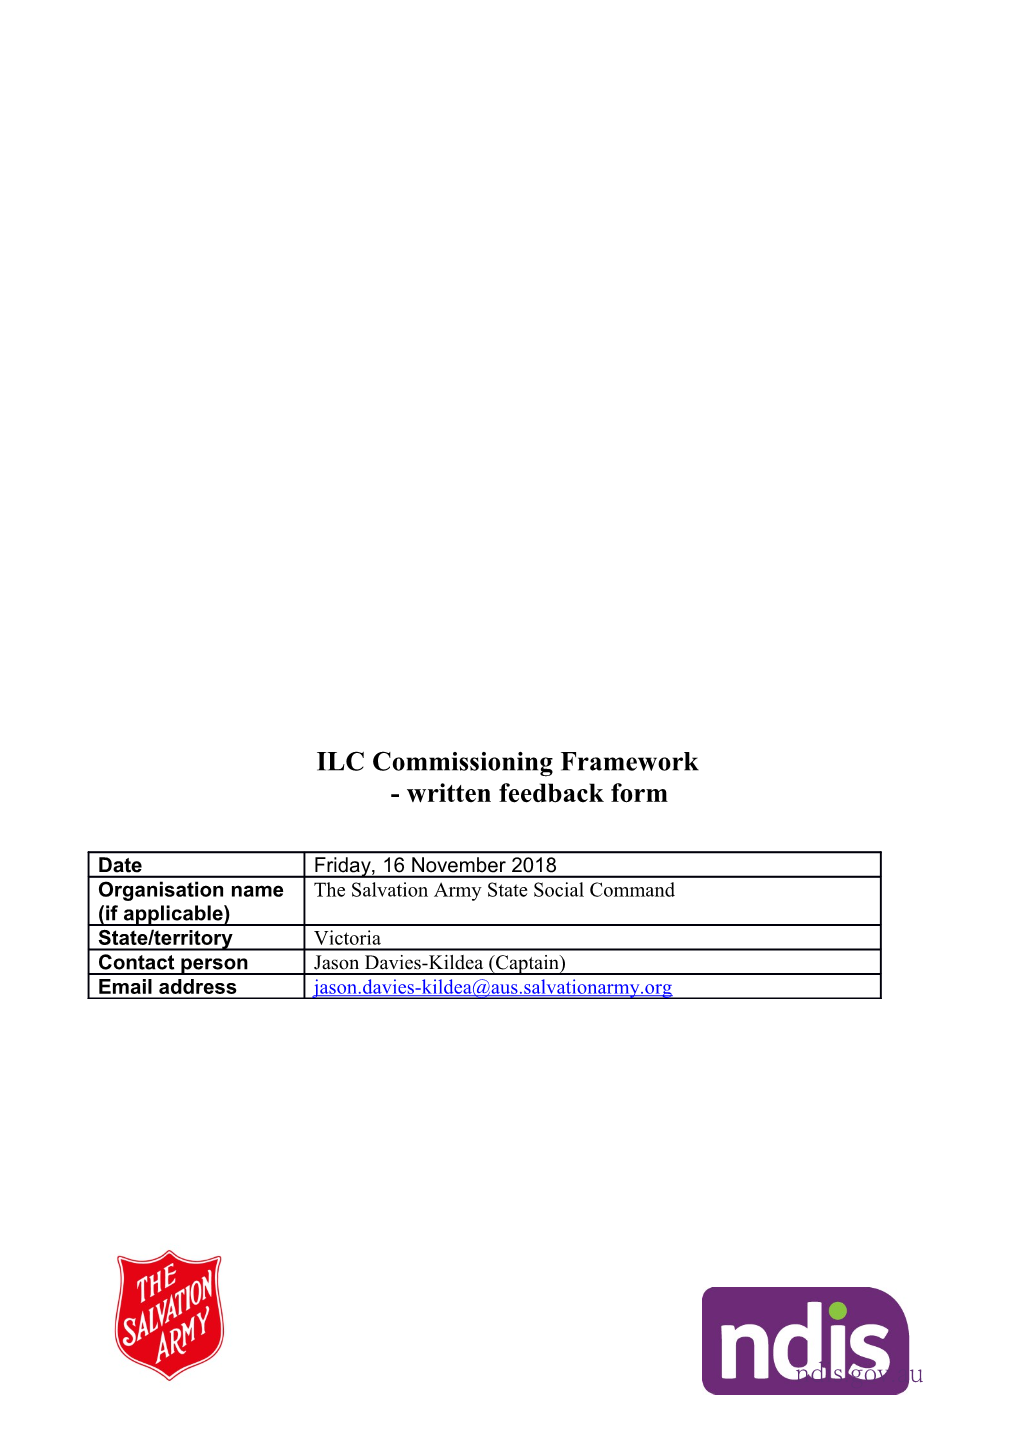 ILC Commissioning Framework - Written Feedback Form